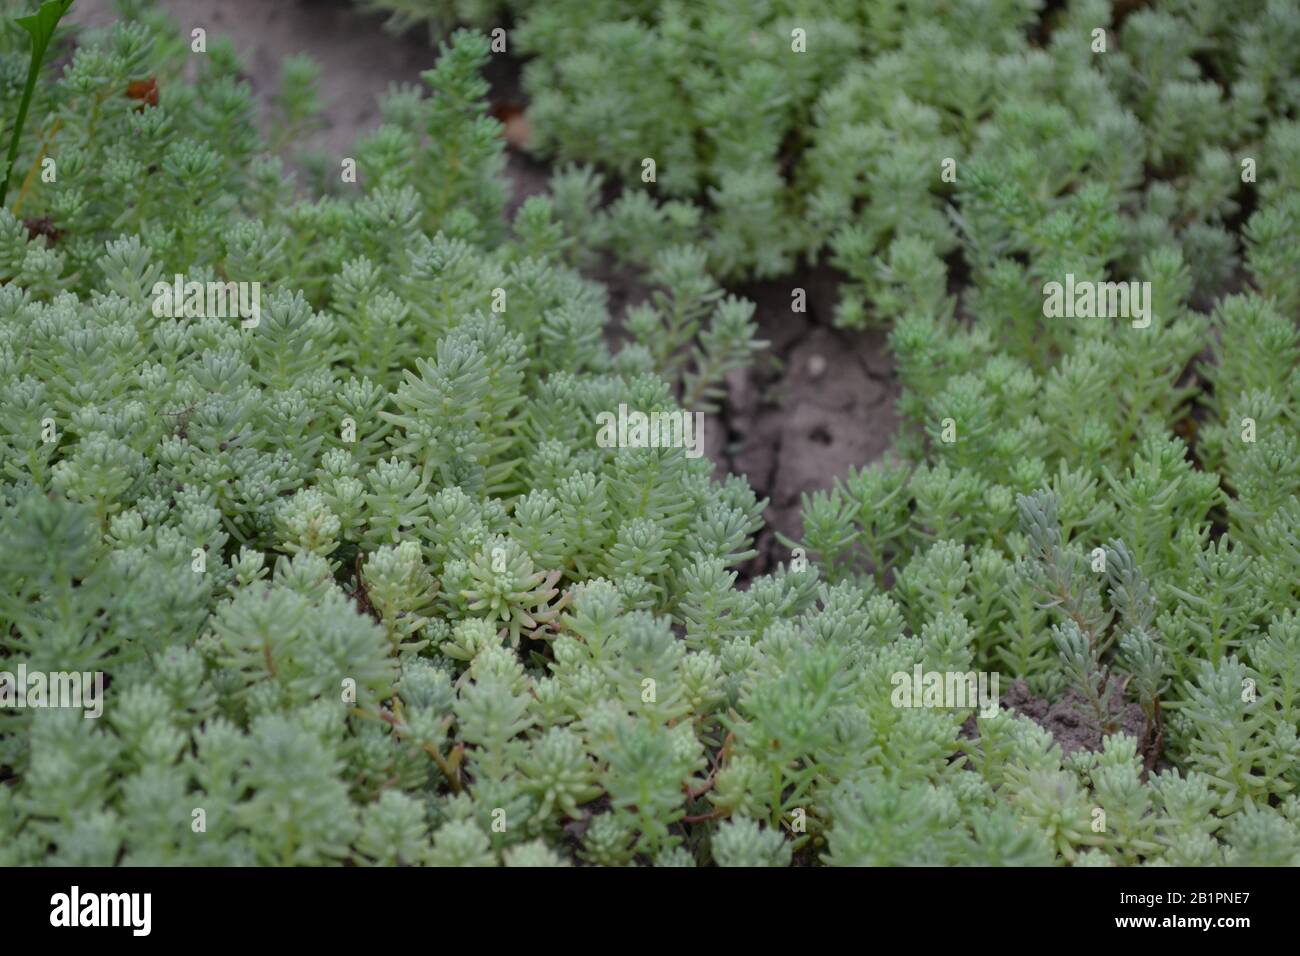 Hare cabbage. Stonecrop.  Sedum. Green moss. Decorative grassy carpet. Green flower bed decoration. Horizontal Stock Photo